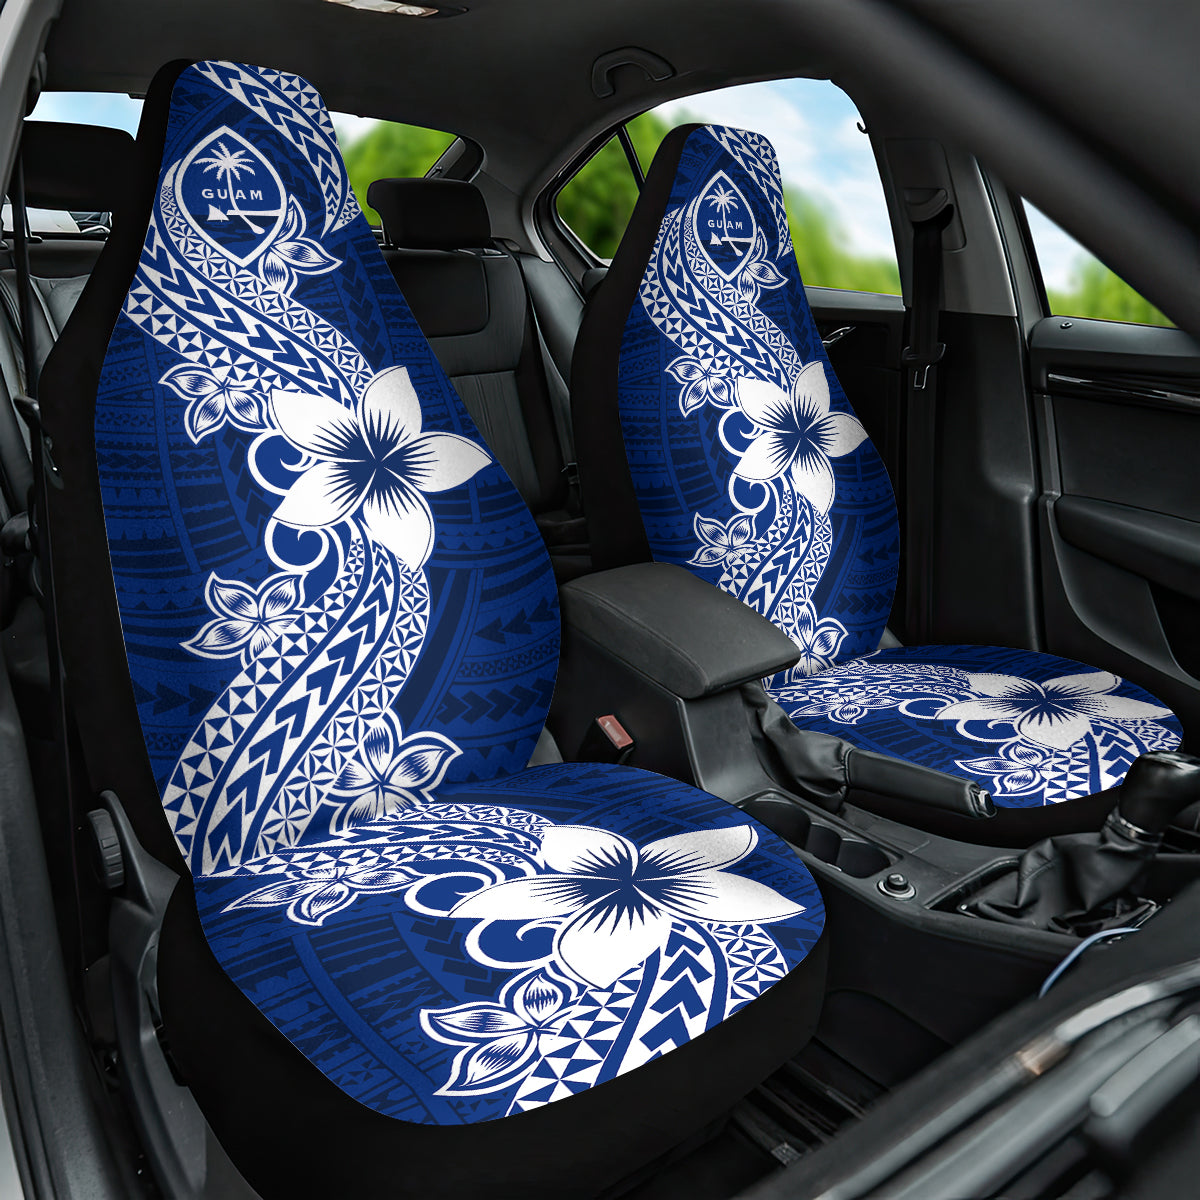 Hafa Adai Guam Car Seat Cover Polynesian Floral Blue Pattern LT01 One Size Blue - Polynesian Pride